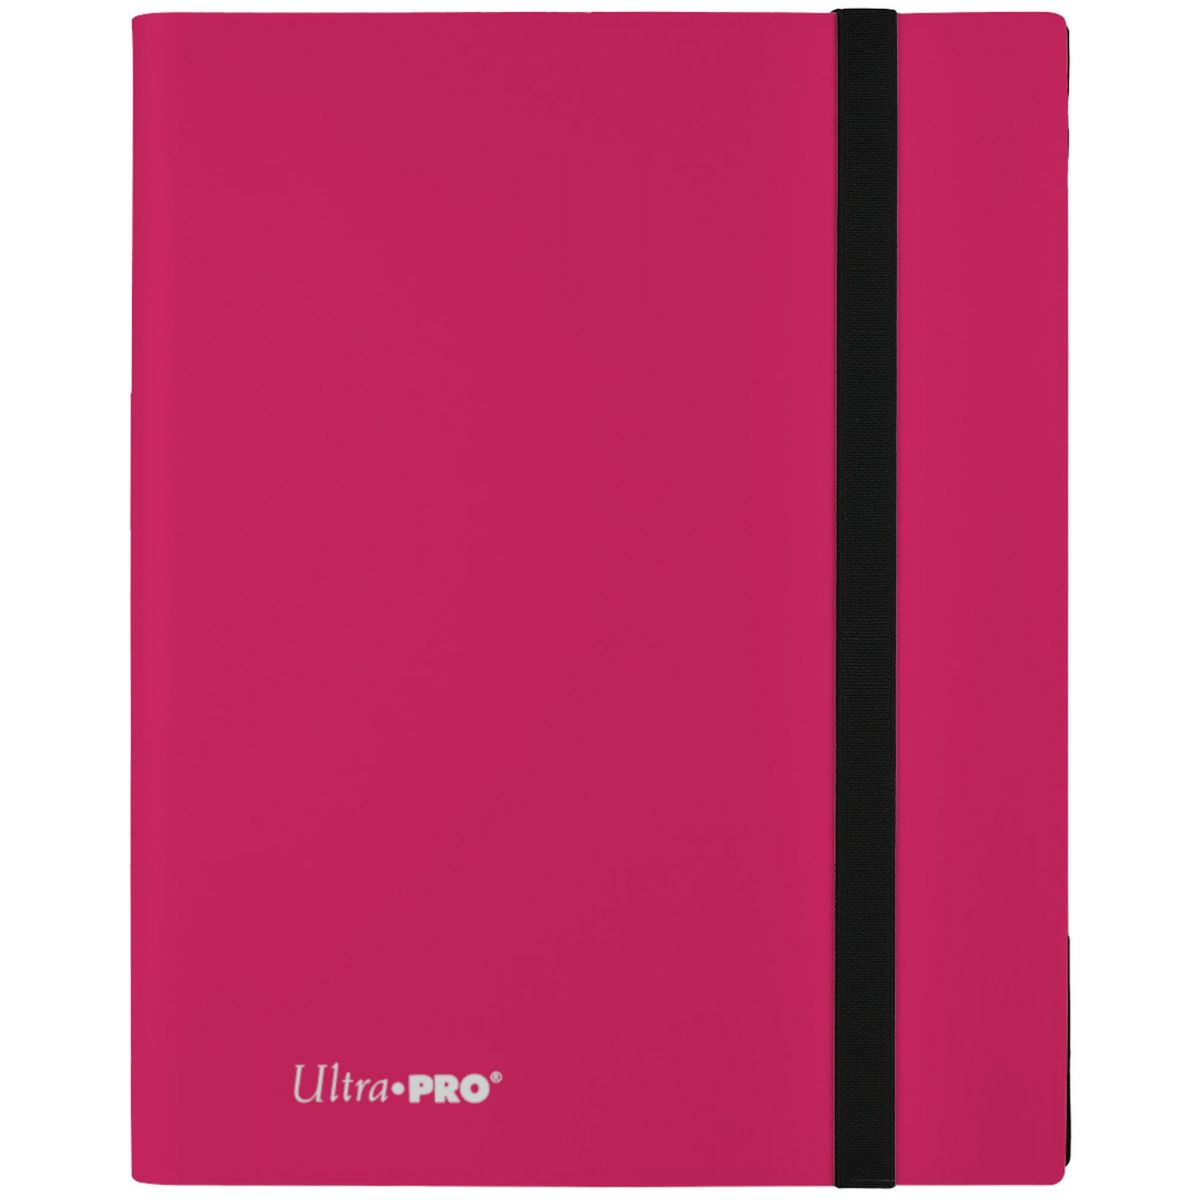 Ultra Pro - Pro Binder - Eclipse - 9 Cases - Hot Pink Hot Pink (360)